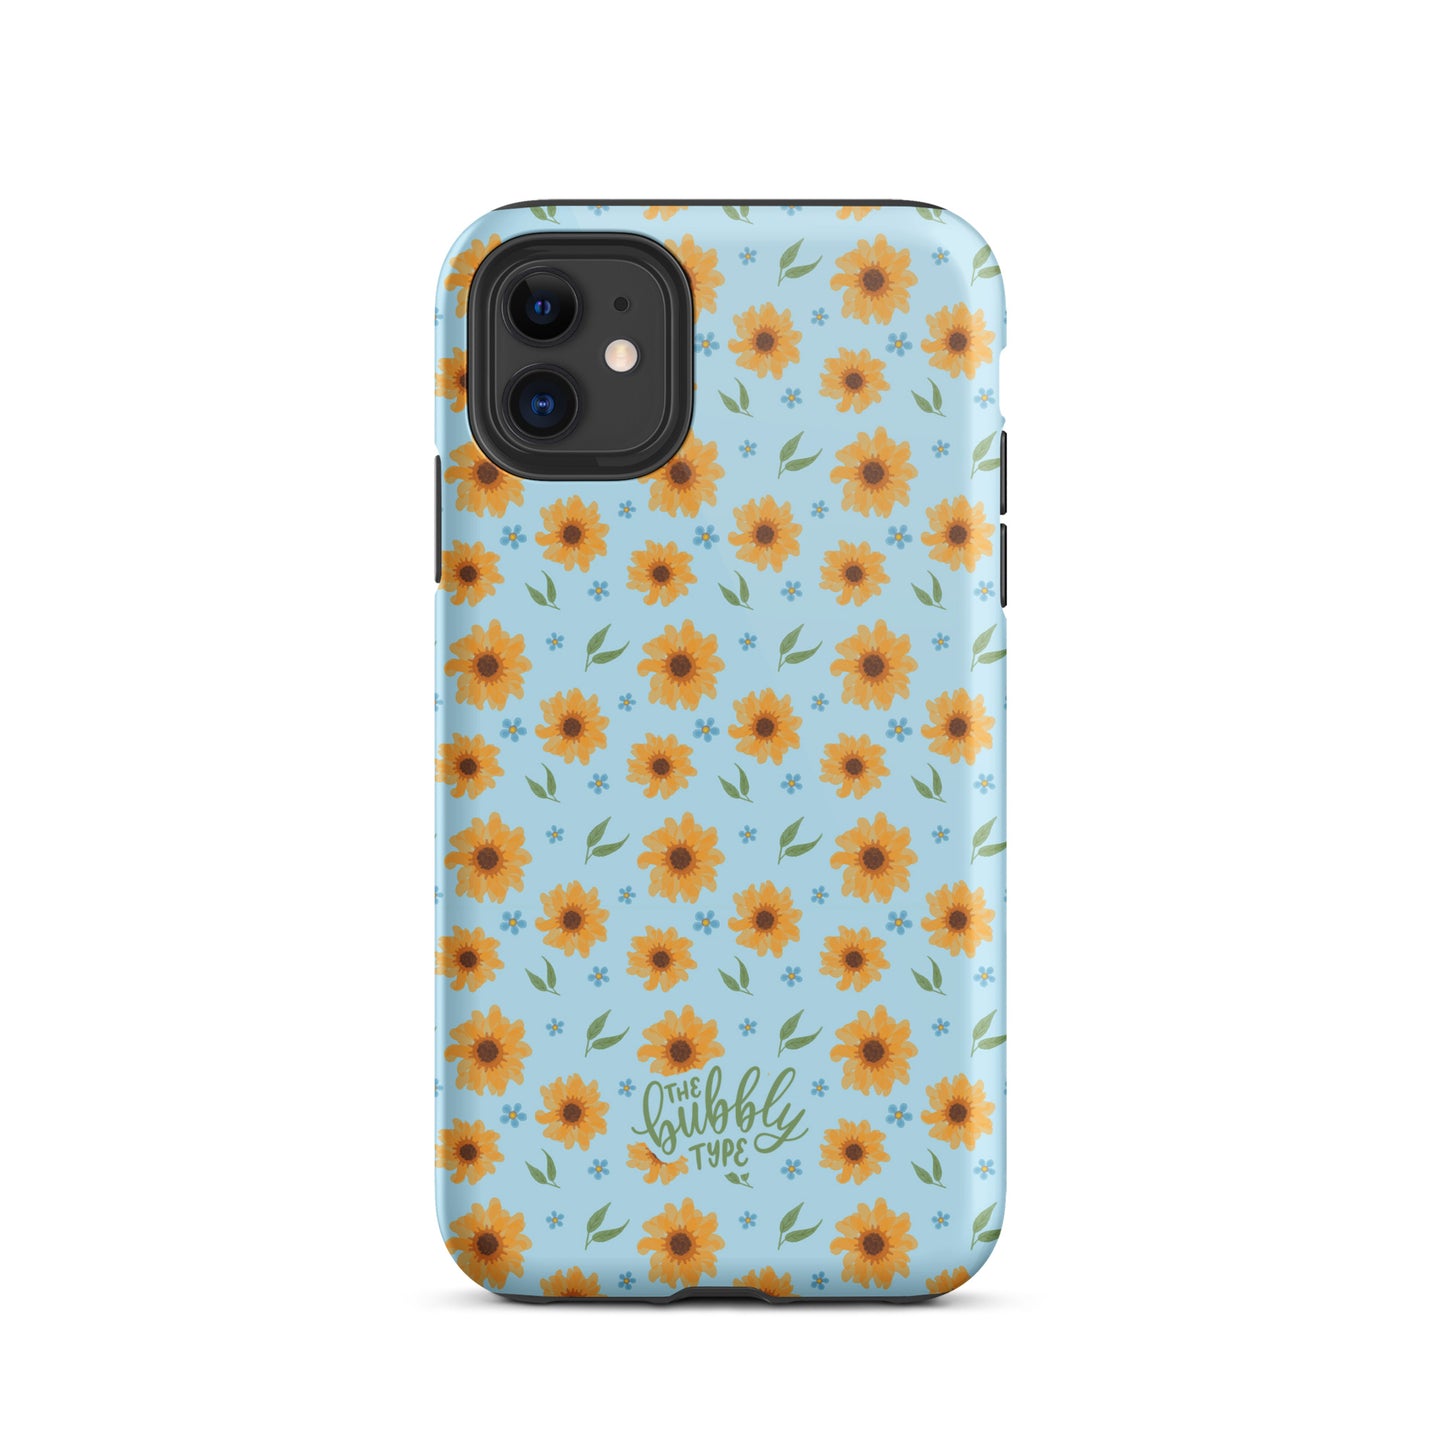 Summer Flowers Tough iPhone case